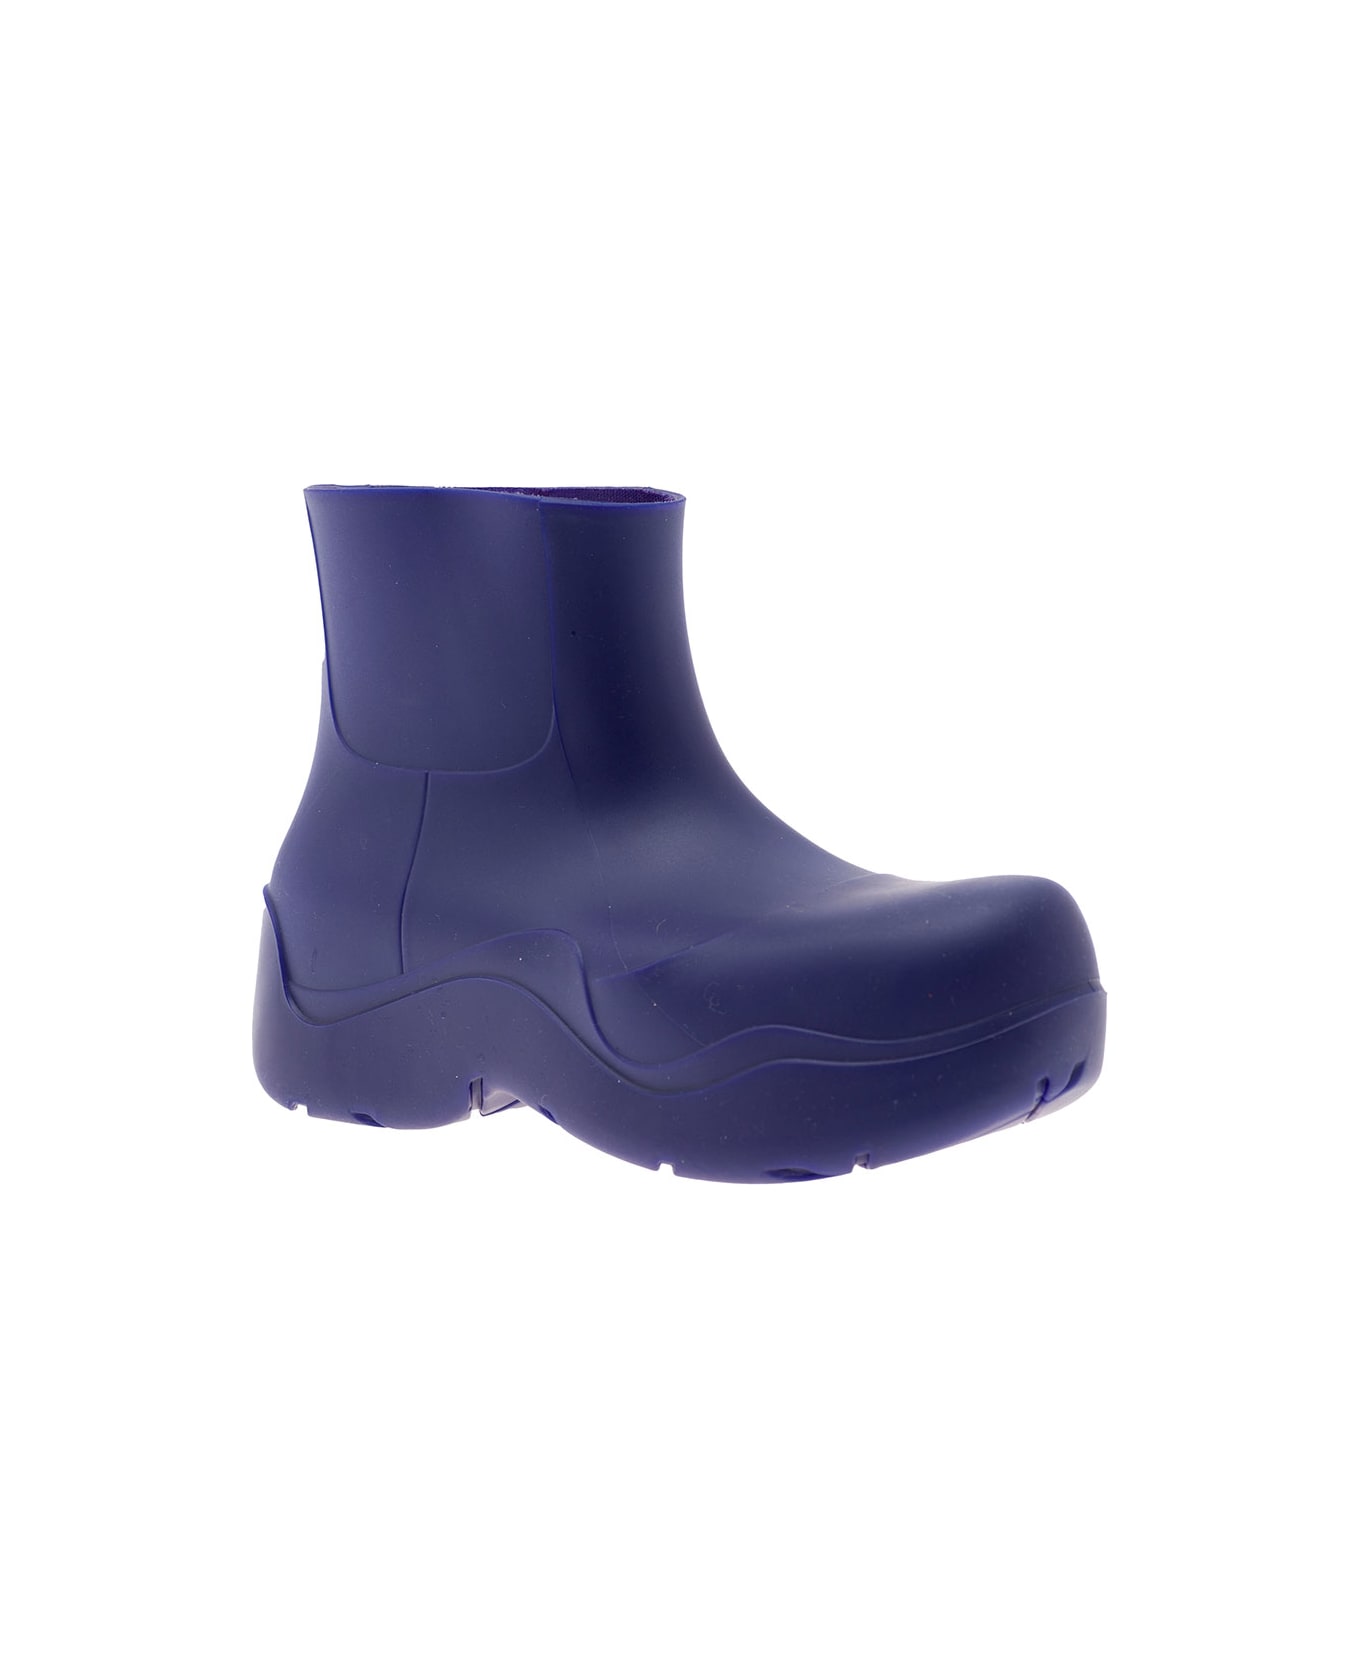 Bottega Veneta Puddle Boots With Chunky Platform And Matte Finish - Violet